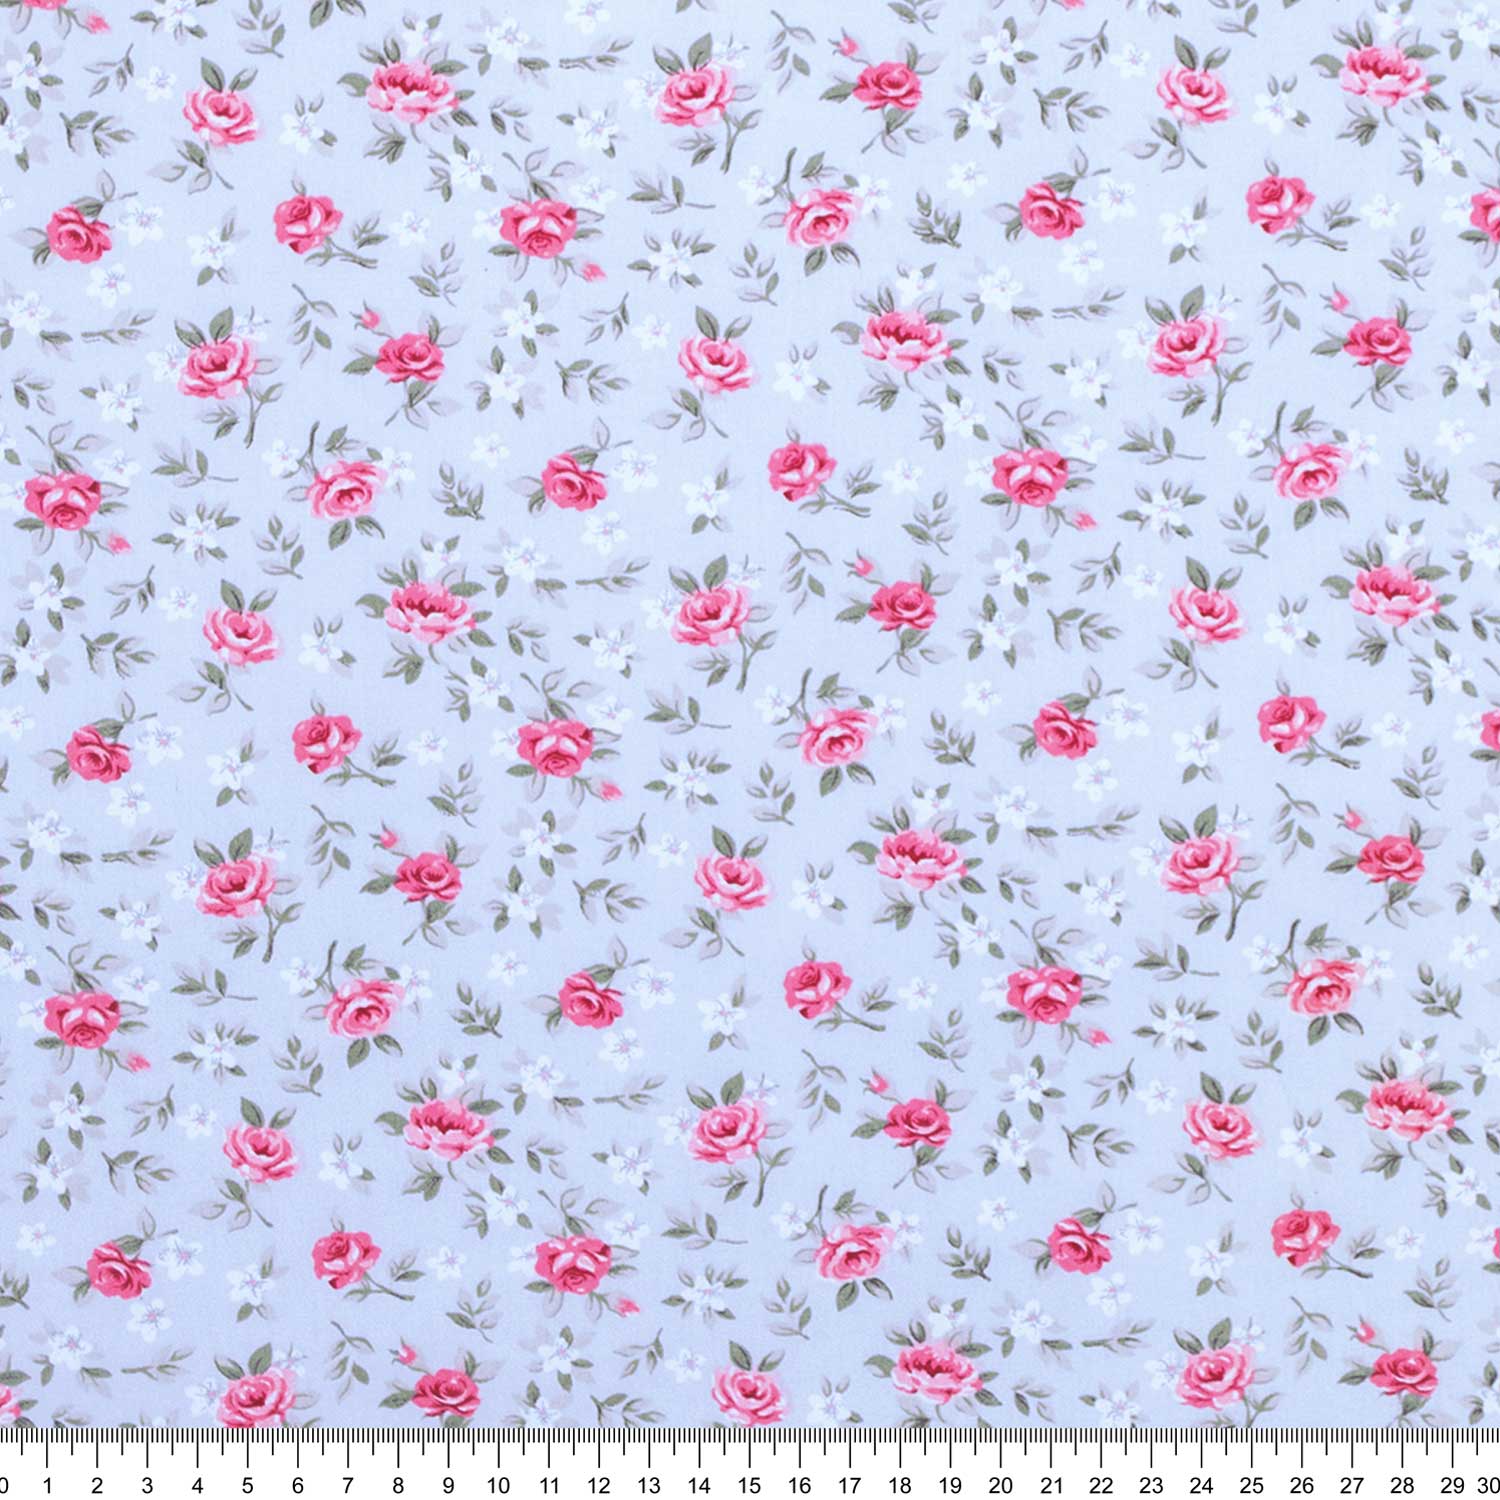 tecido-tricoline-estampado-floral-lucia-cinza-della-aviamentos-tecidos-caldeira-capa2-5298